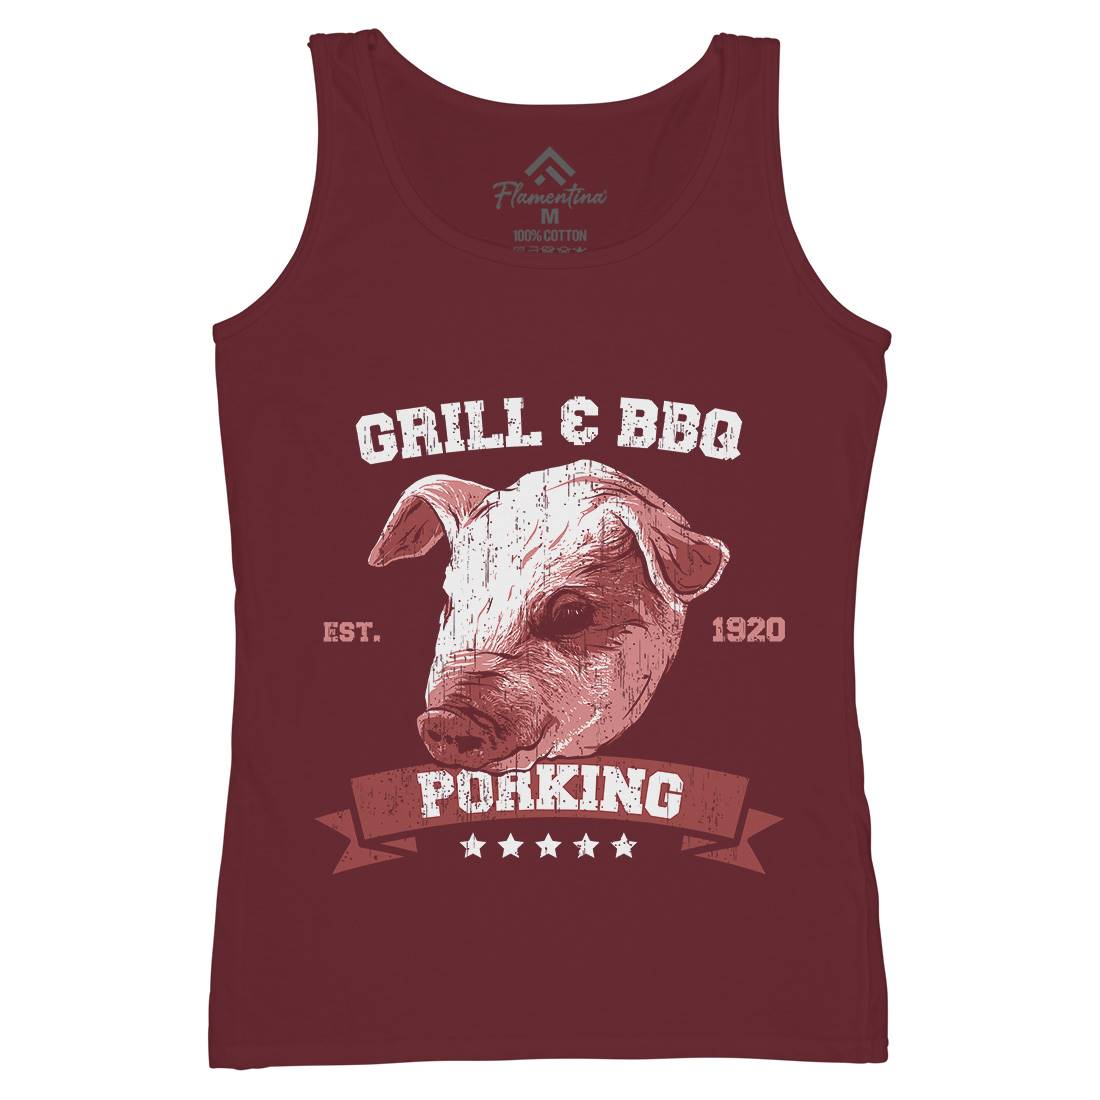 Pork King Womens Organic Tank Top Vest Animals B751